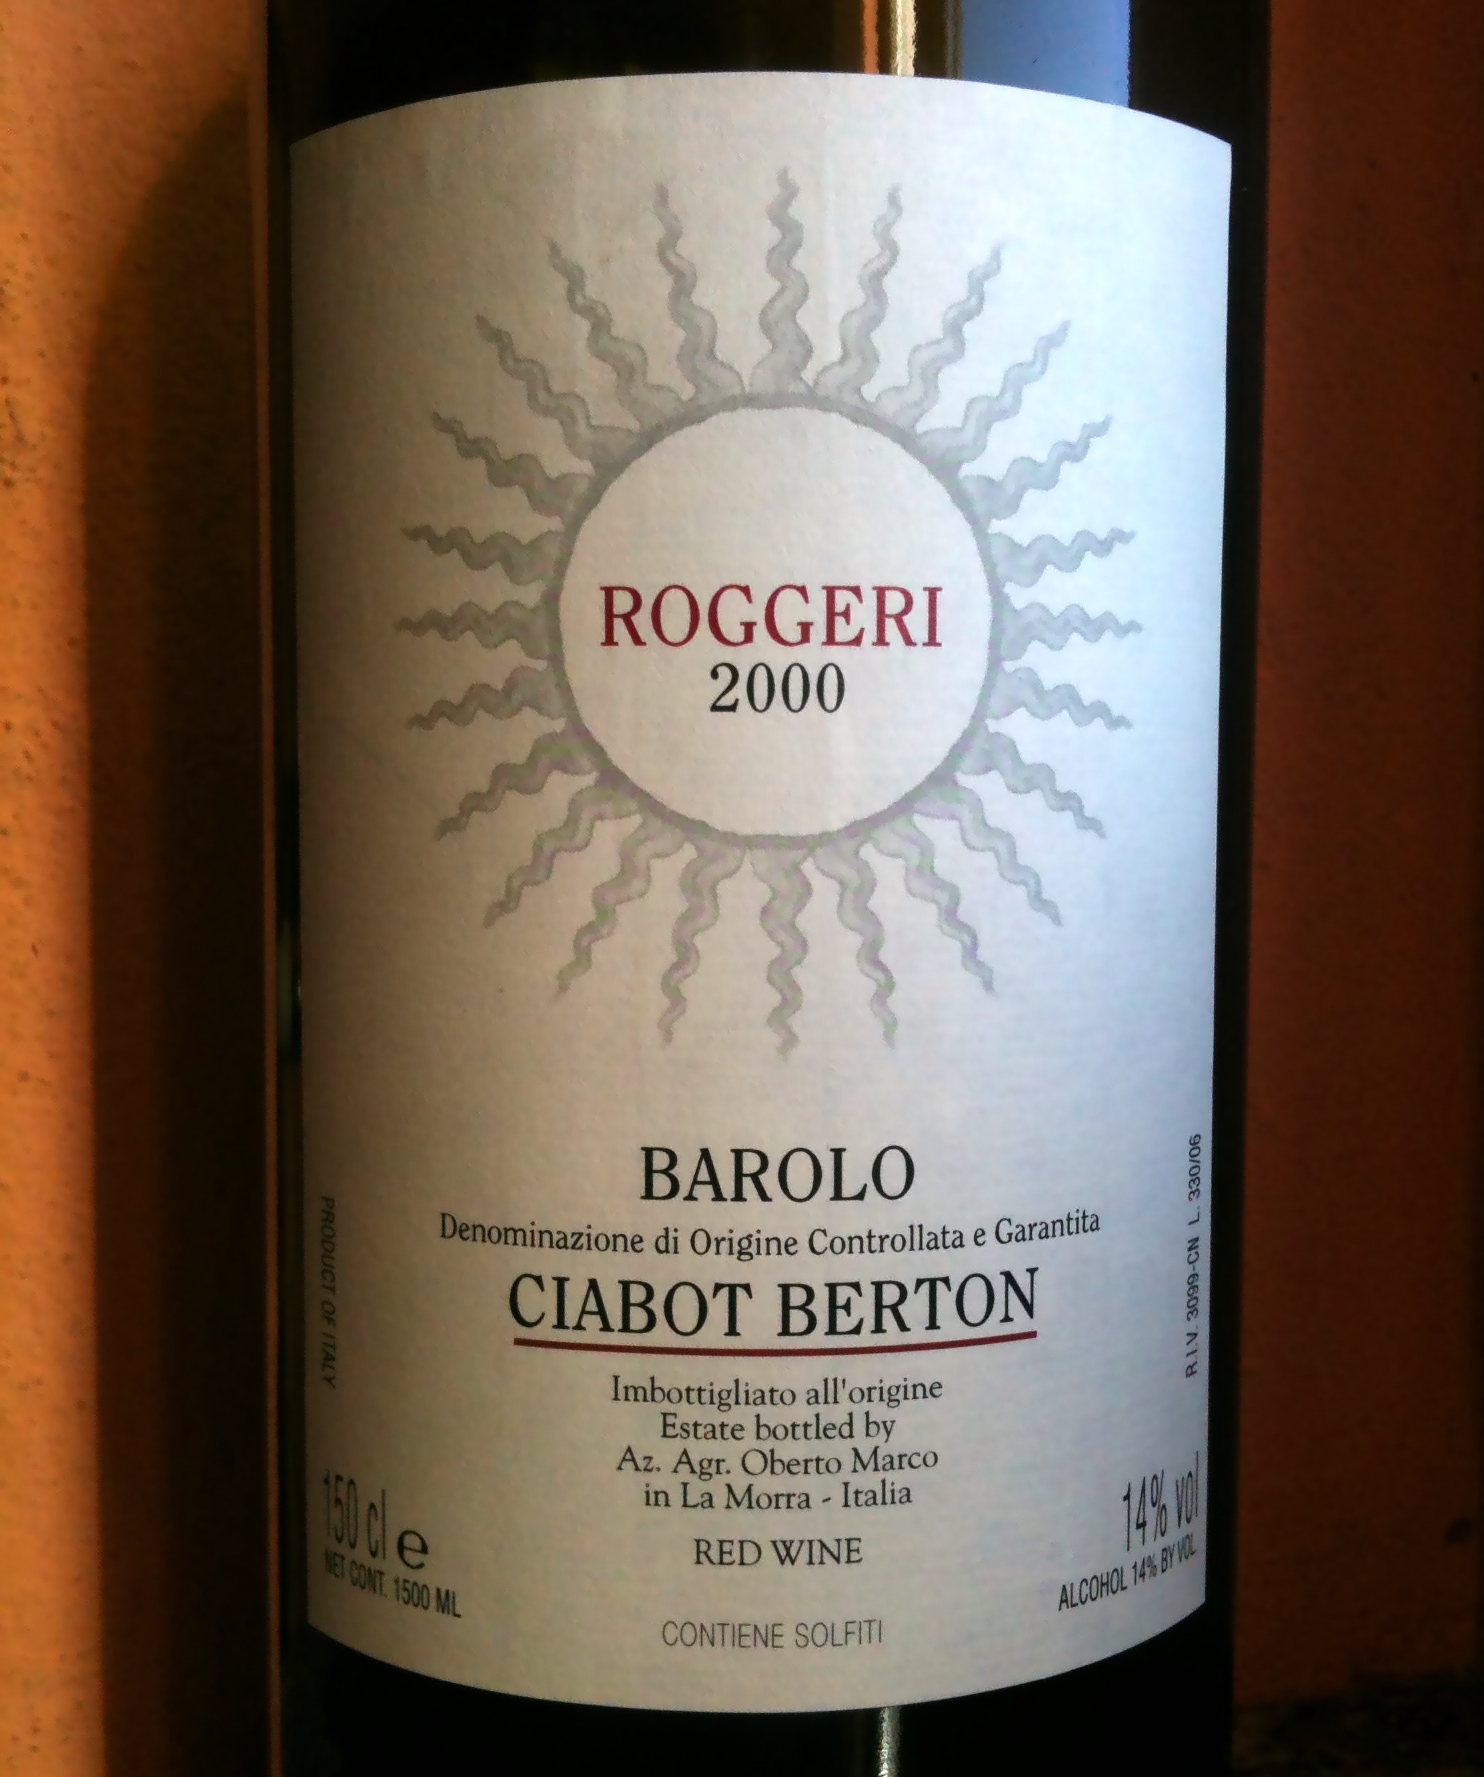 Ciabot Berton Barolo Roggeri 2000